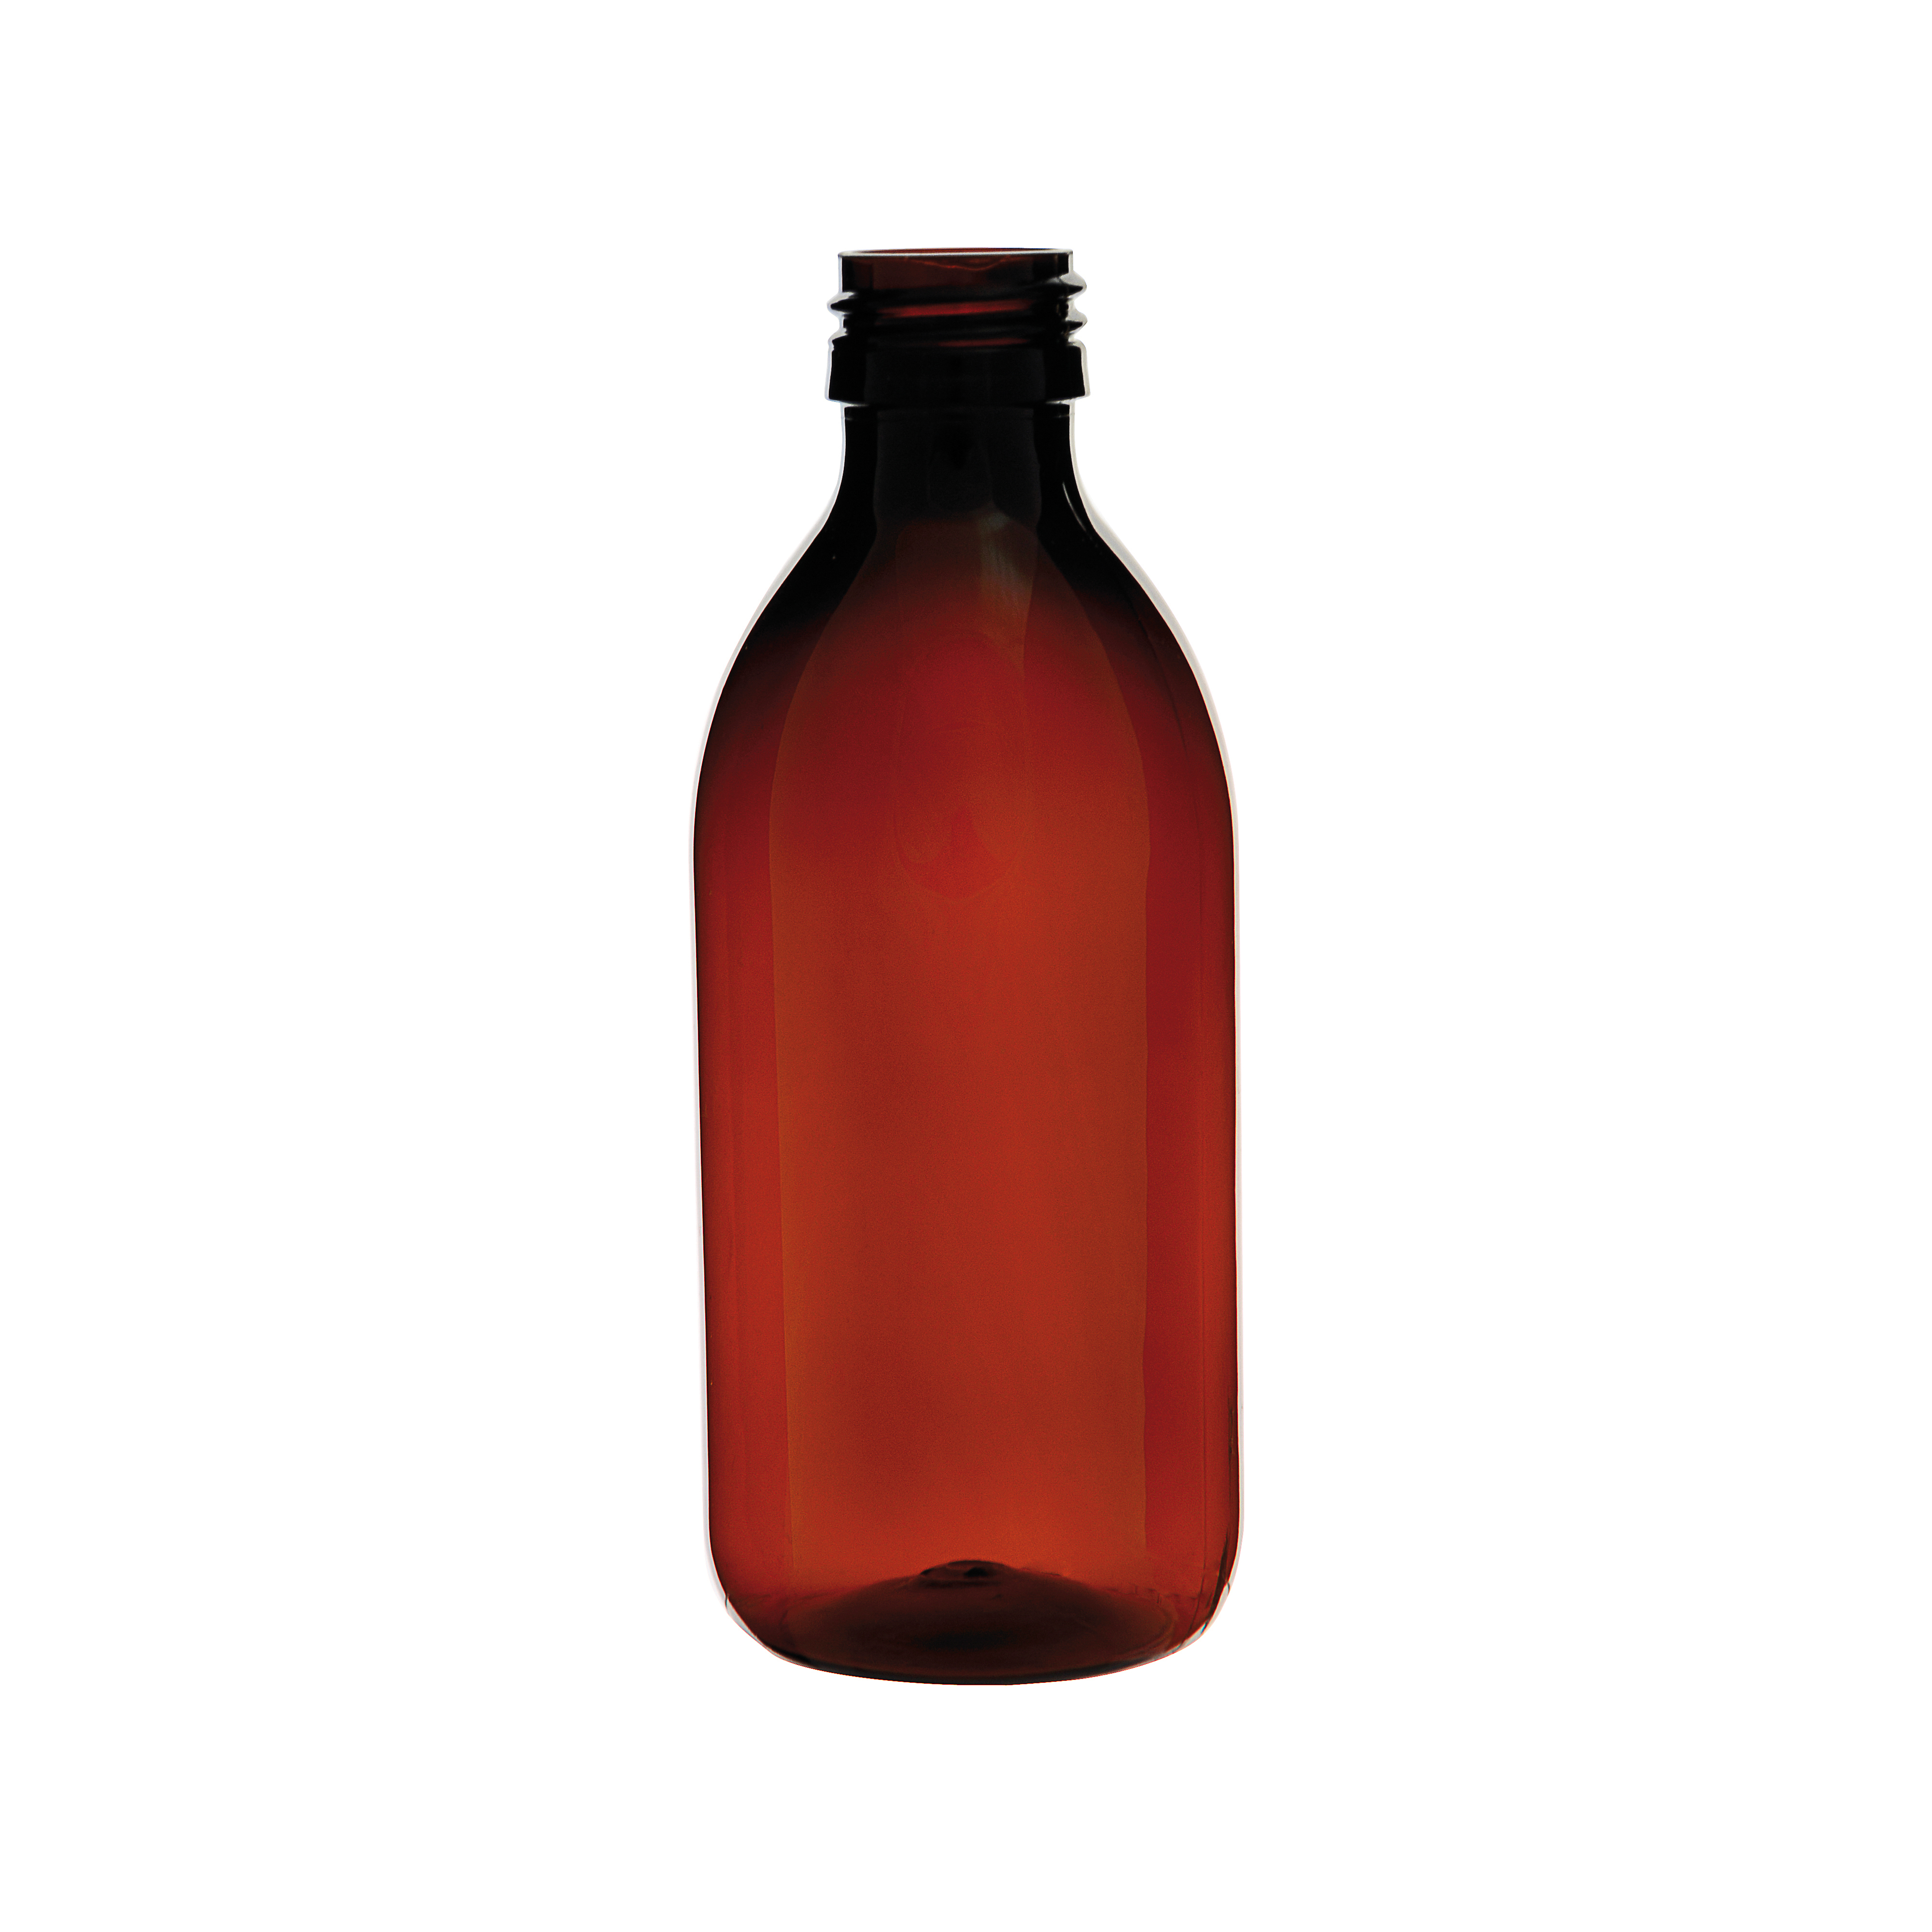 Темные бутылочки. ПЭТ бутылка 250 мл. 998659 Бутыль темная 100 мл с винтовой крышкой (28мм. ПЭТ флаконы 60 мл. Темные стеклянные бутылки.